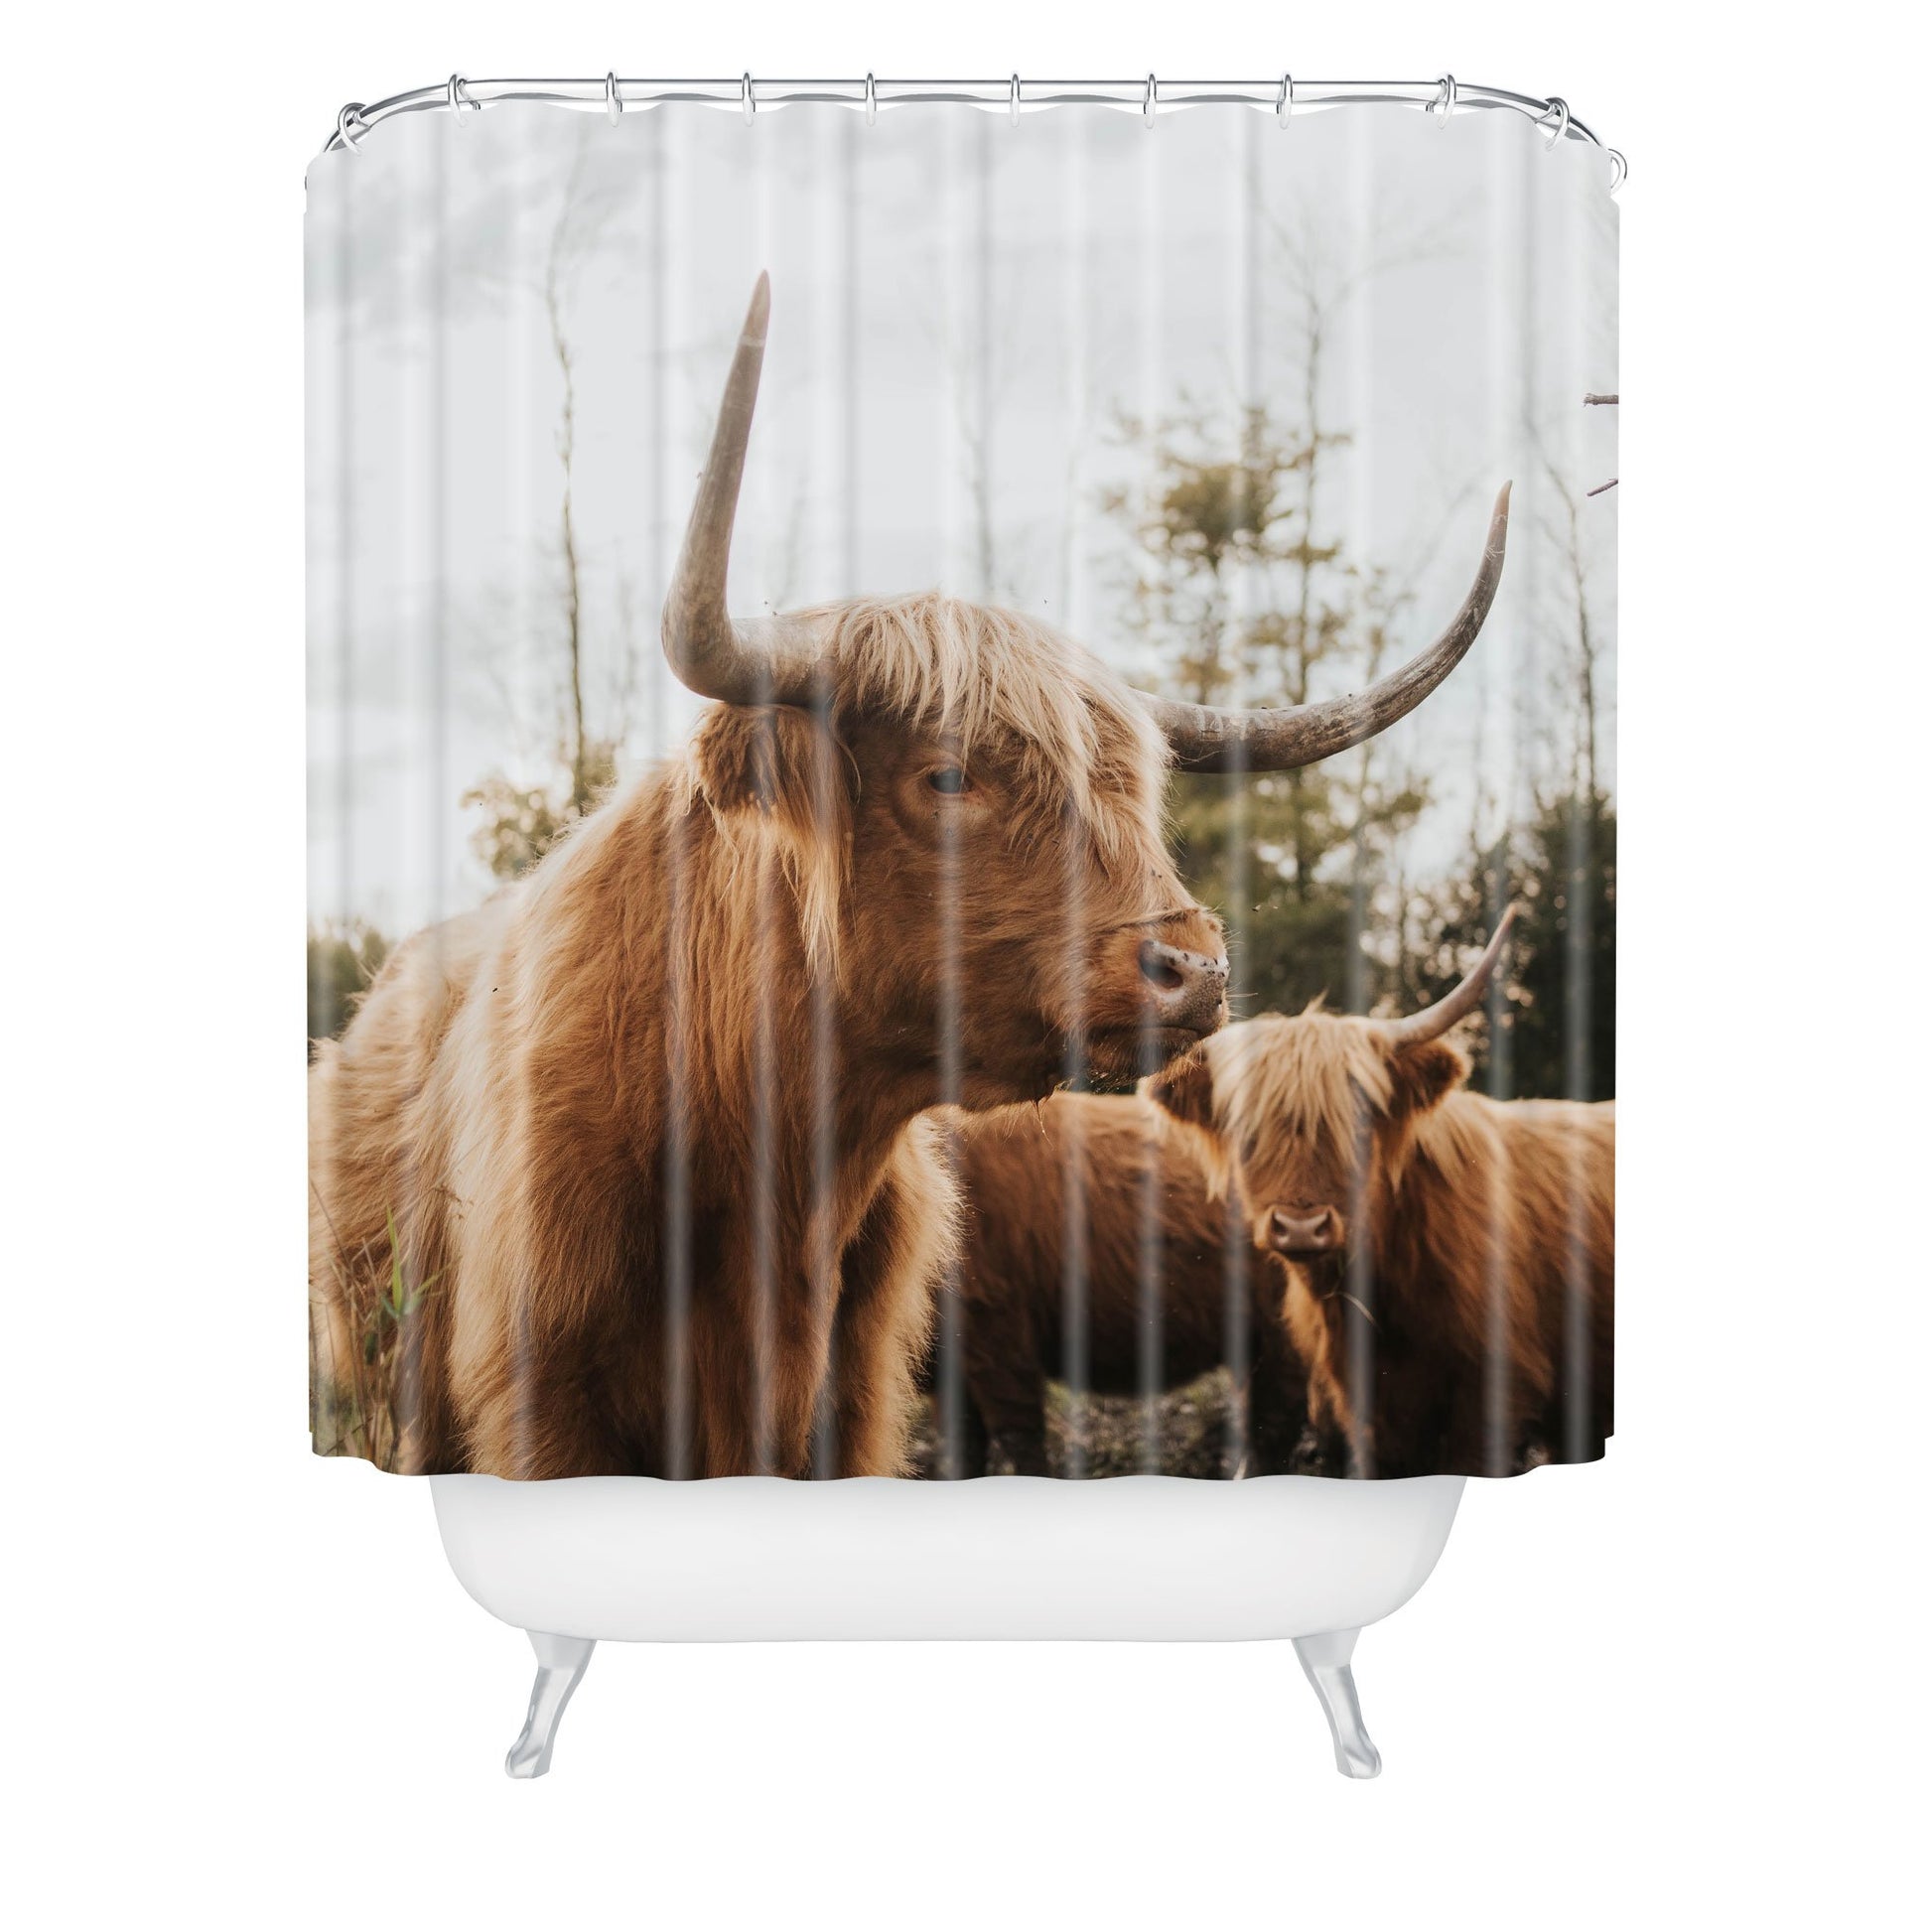 Statuesque Highland Cow Shower Curtain - bathroom, cow, curtain, decor, hairy, highland, home, ranch, rodeo, shower, western, westernhomedecor, westernshowercurtain -  - Baha Ranch Western Wear